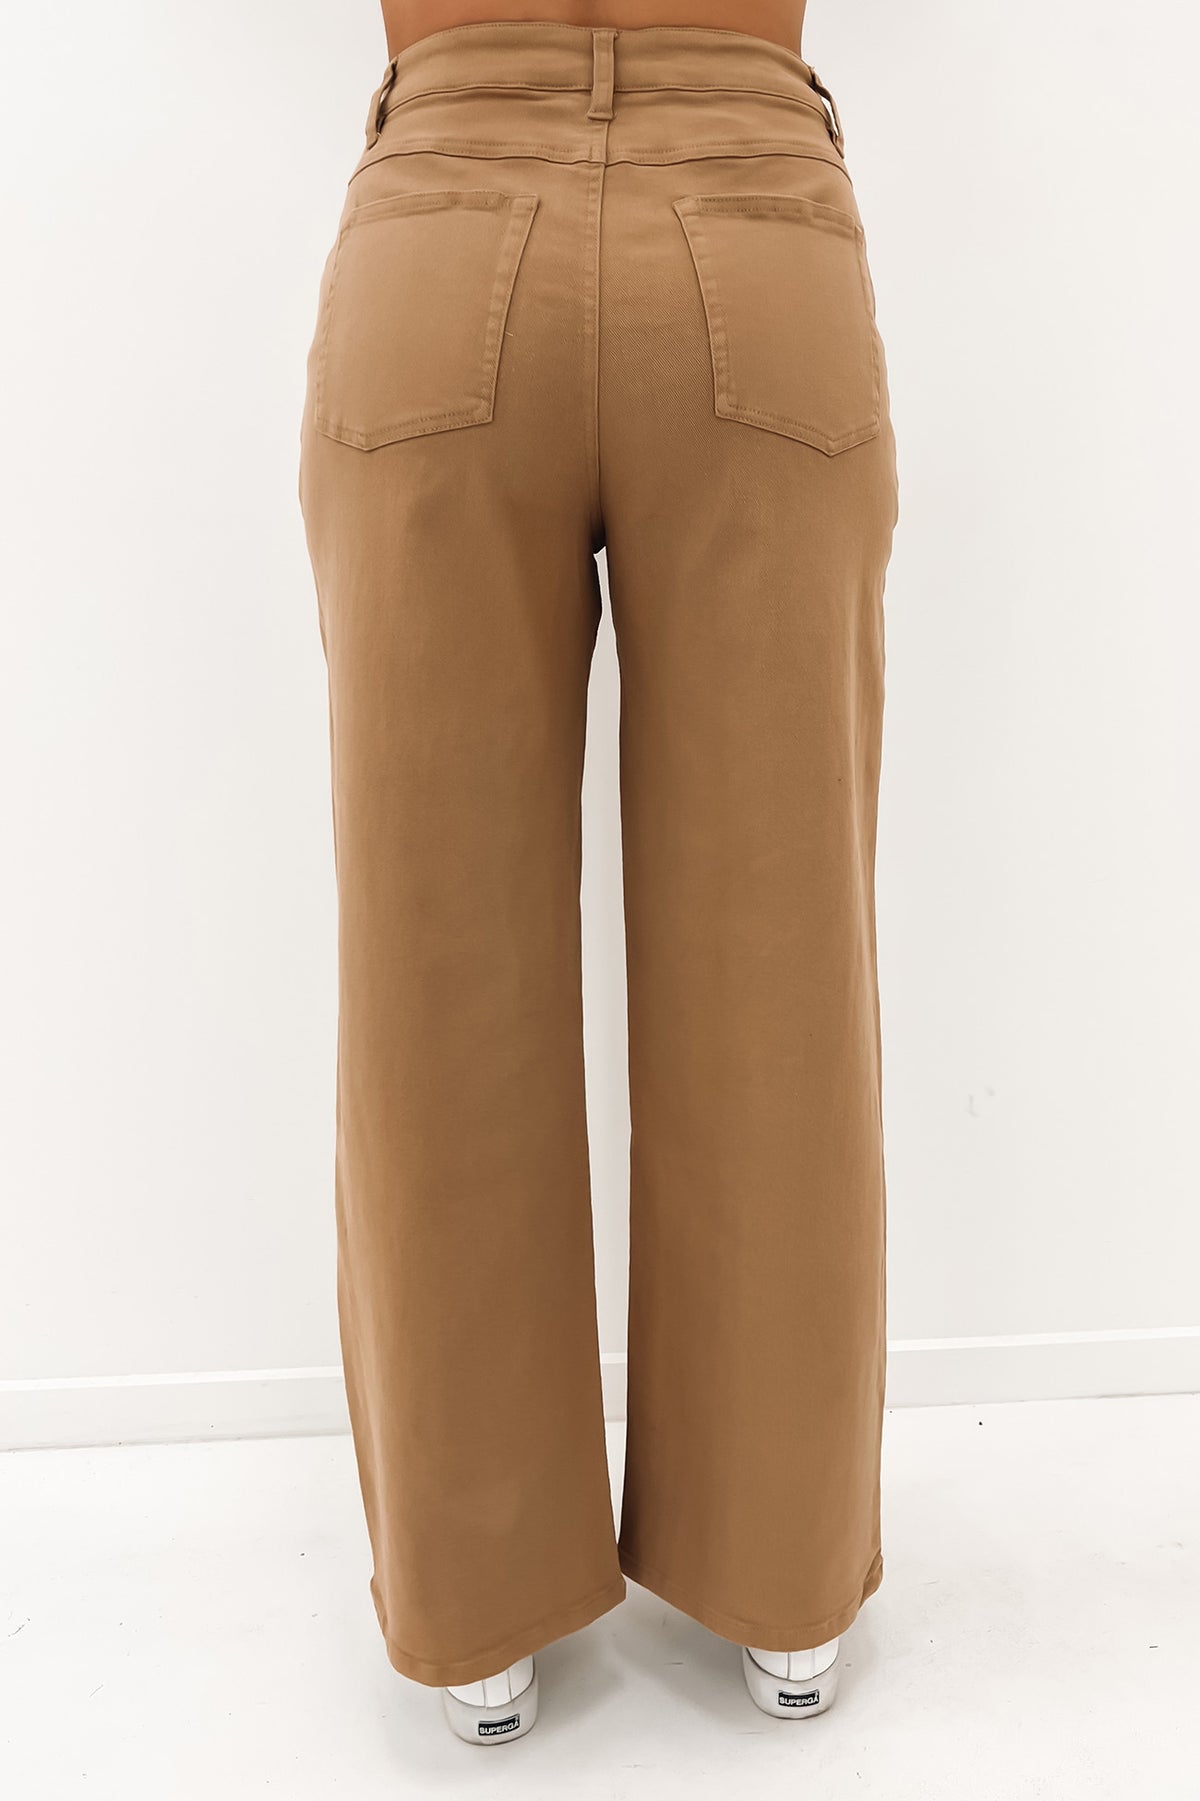 Simon Jersey Women's Stretch Trousers, Slim Leg, Tailored Fit, Tall Length,  Khaki | Simon Jersey